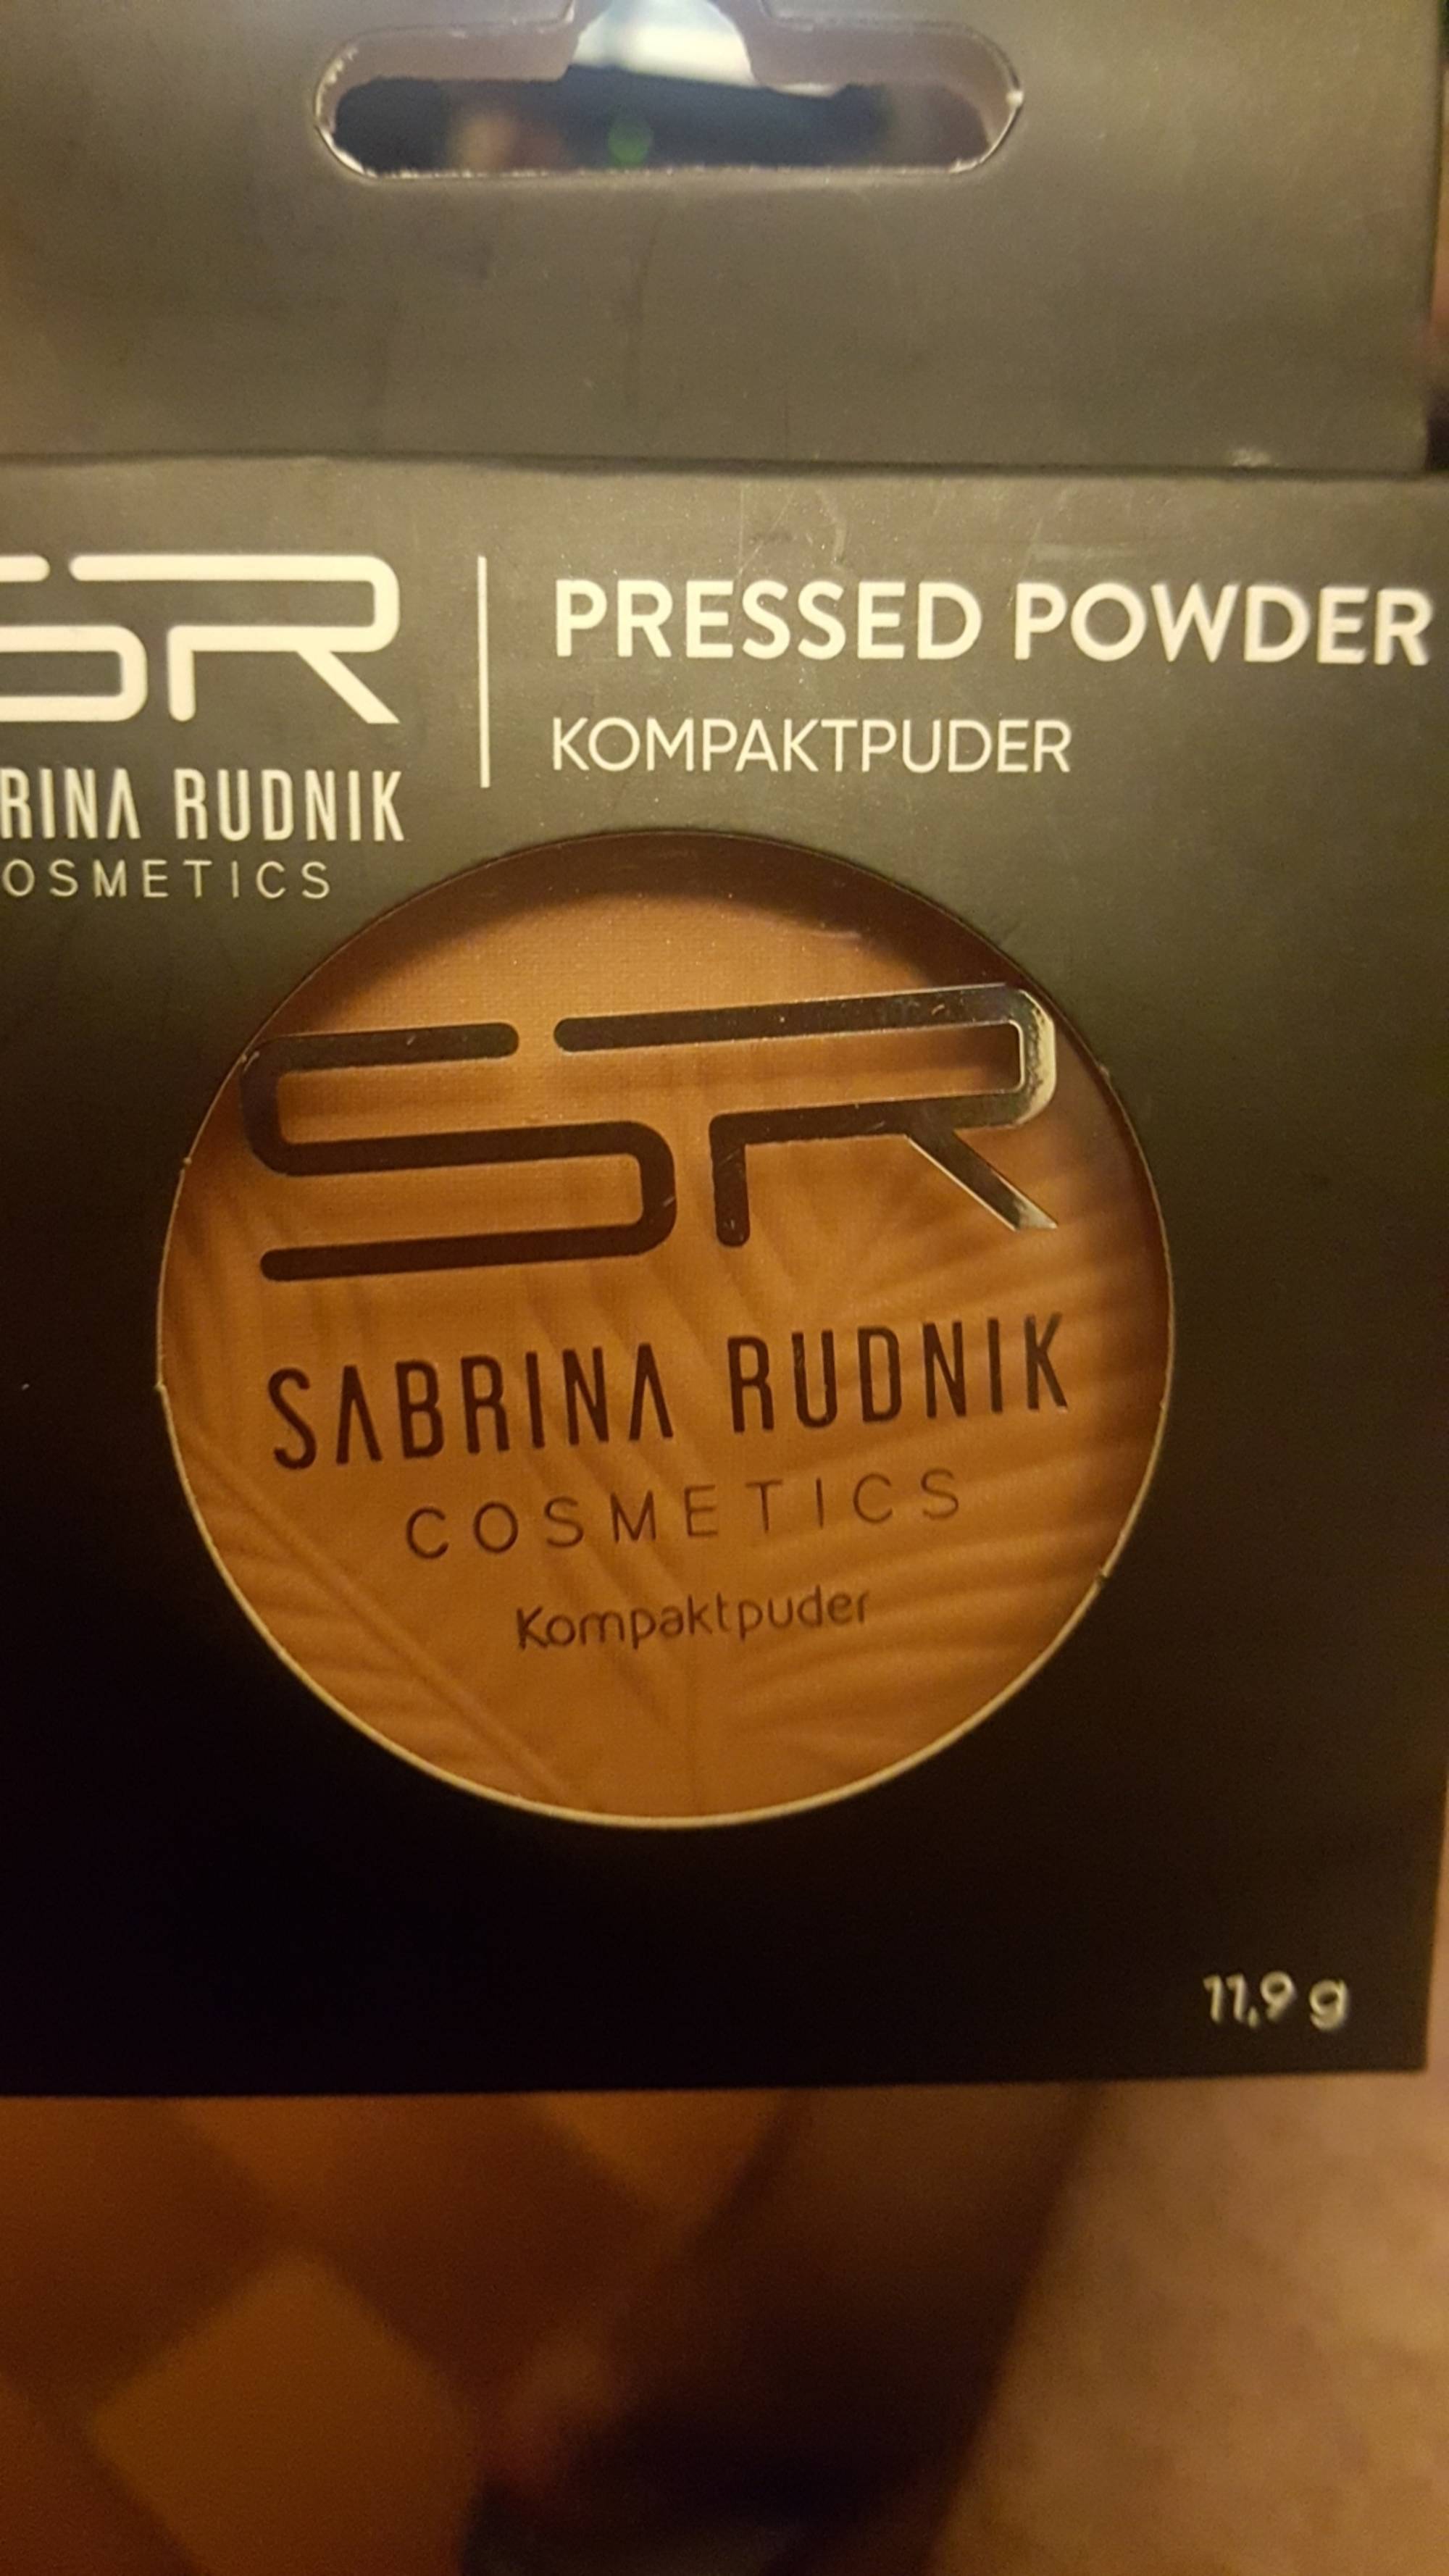 SABRINA RUDNIK COSMETICS - Pressed powder 